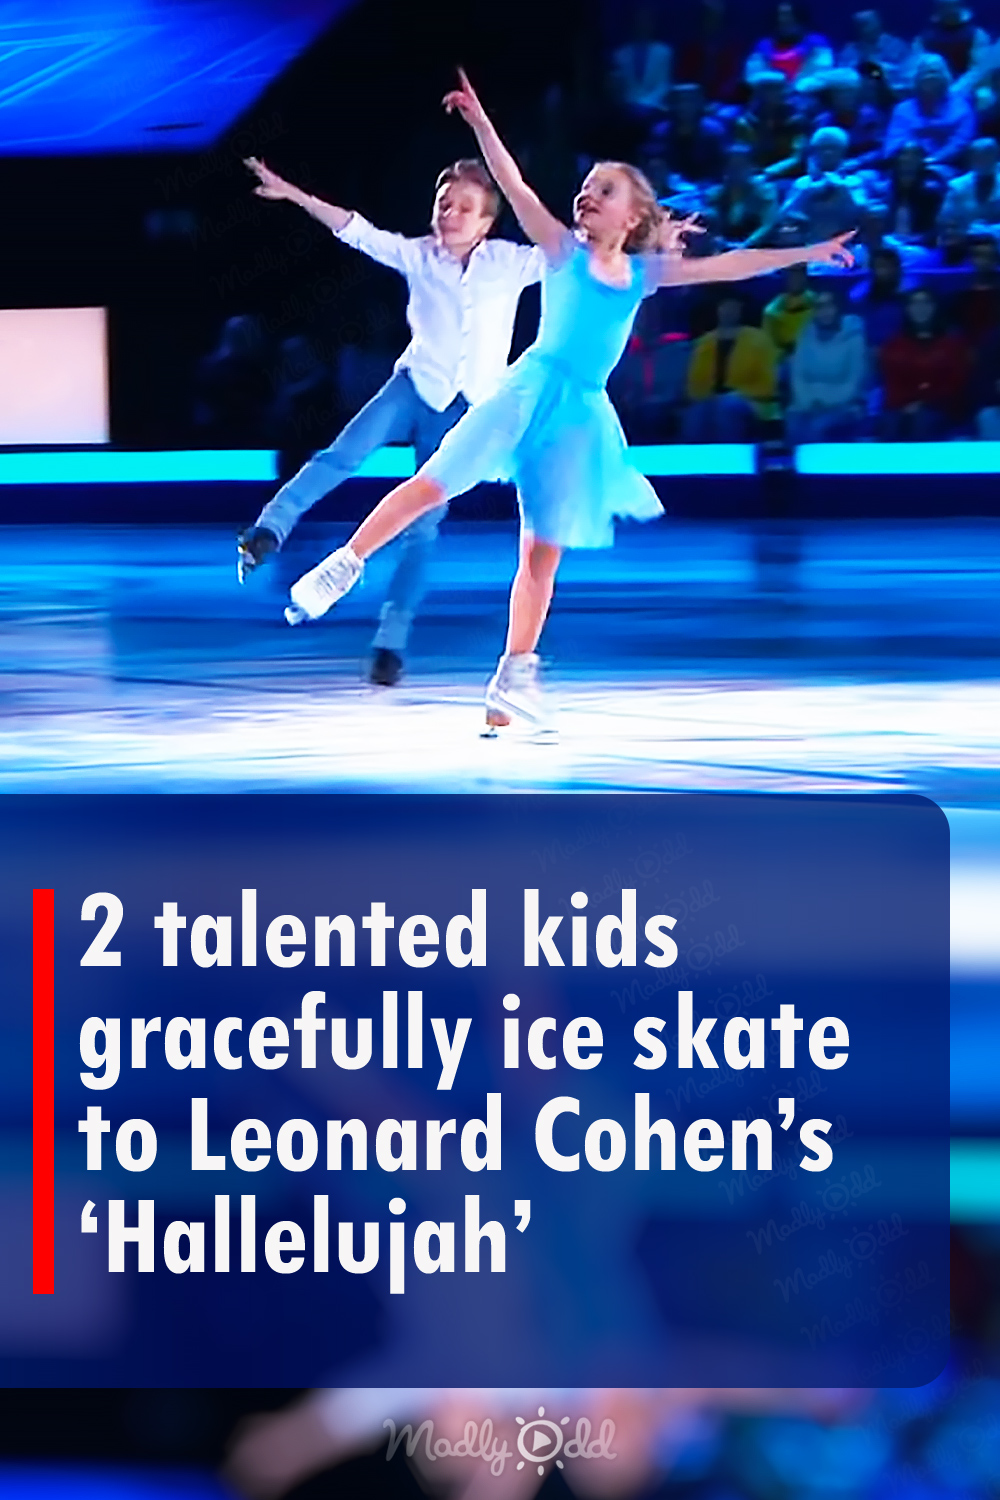 2 talented kids gracefully ice skate to Leonard Cohen’s ‘Hallelujah’